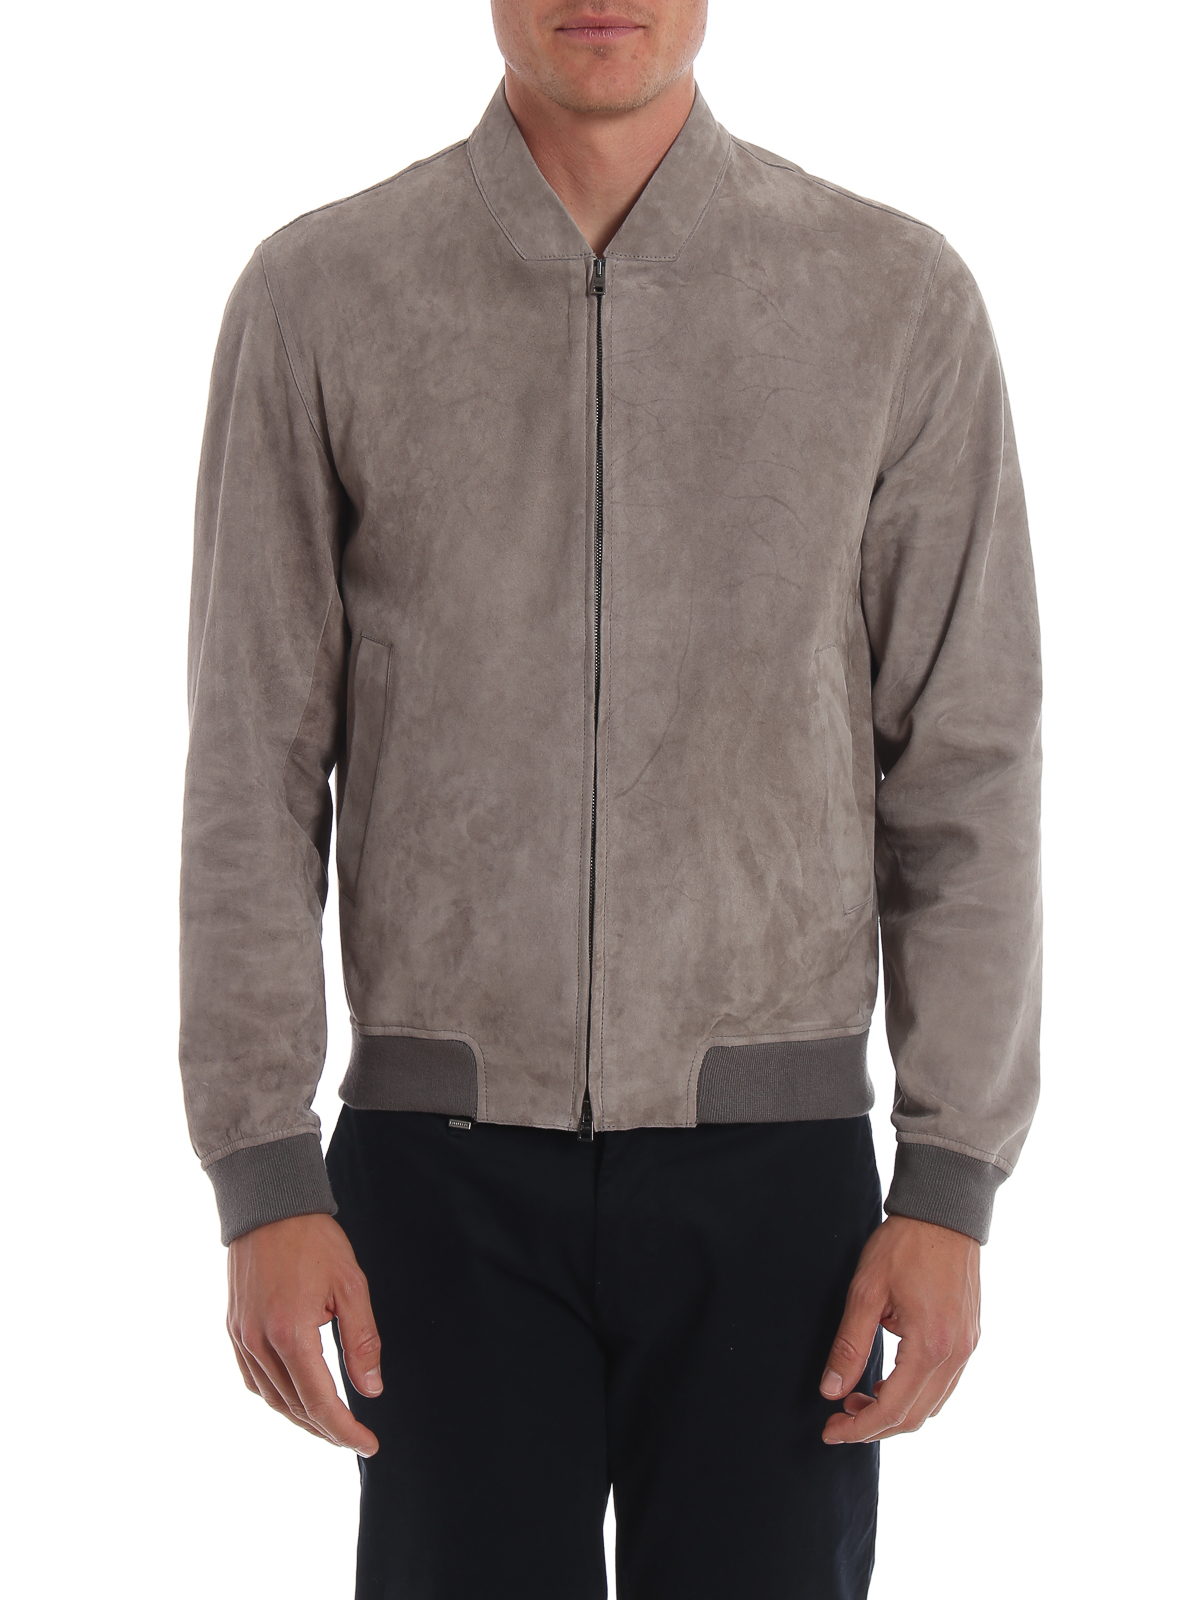 Leather jacket Herno - Dove grey suede bomber jacket - PL0062U180882700